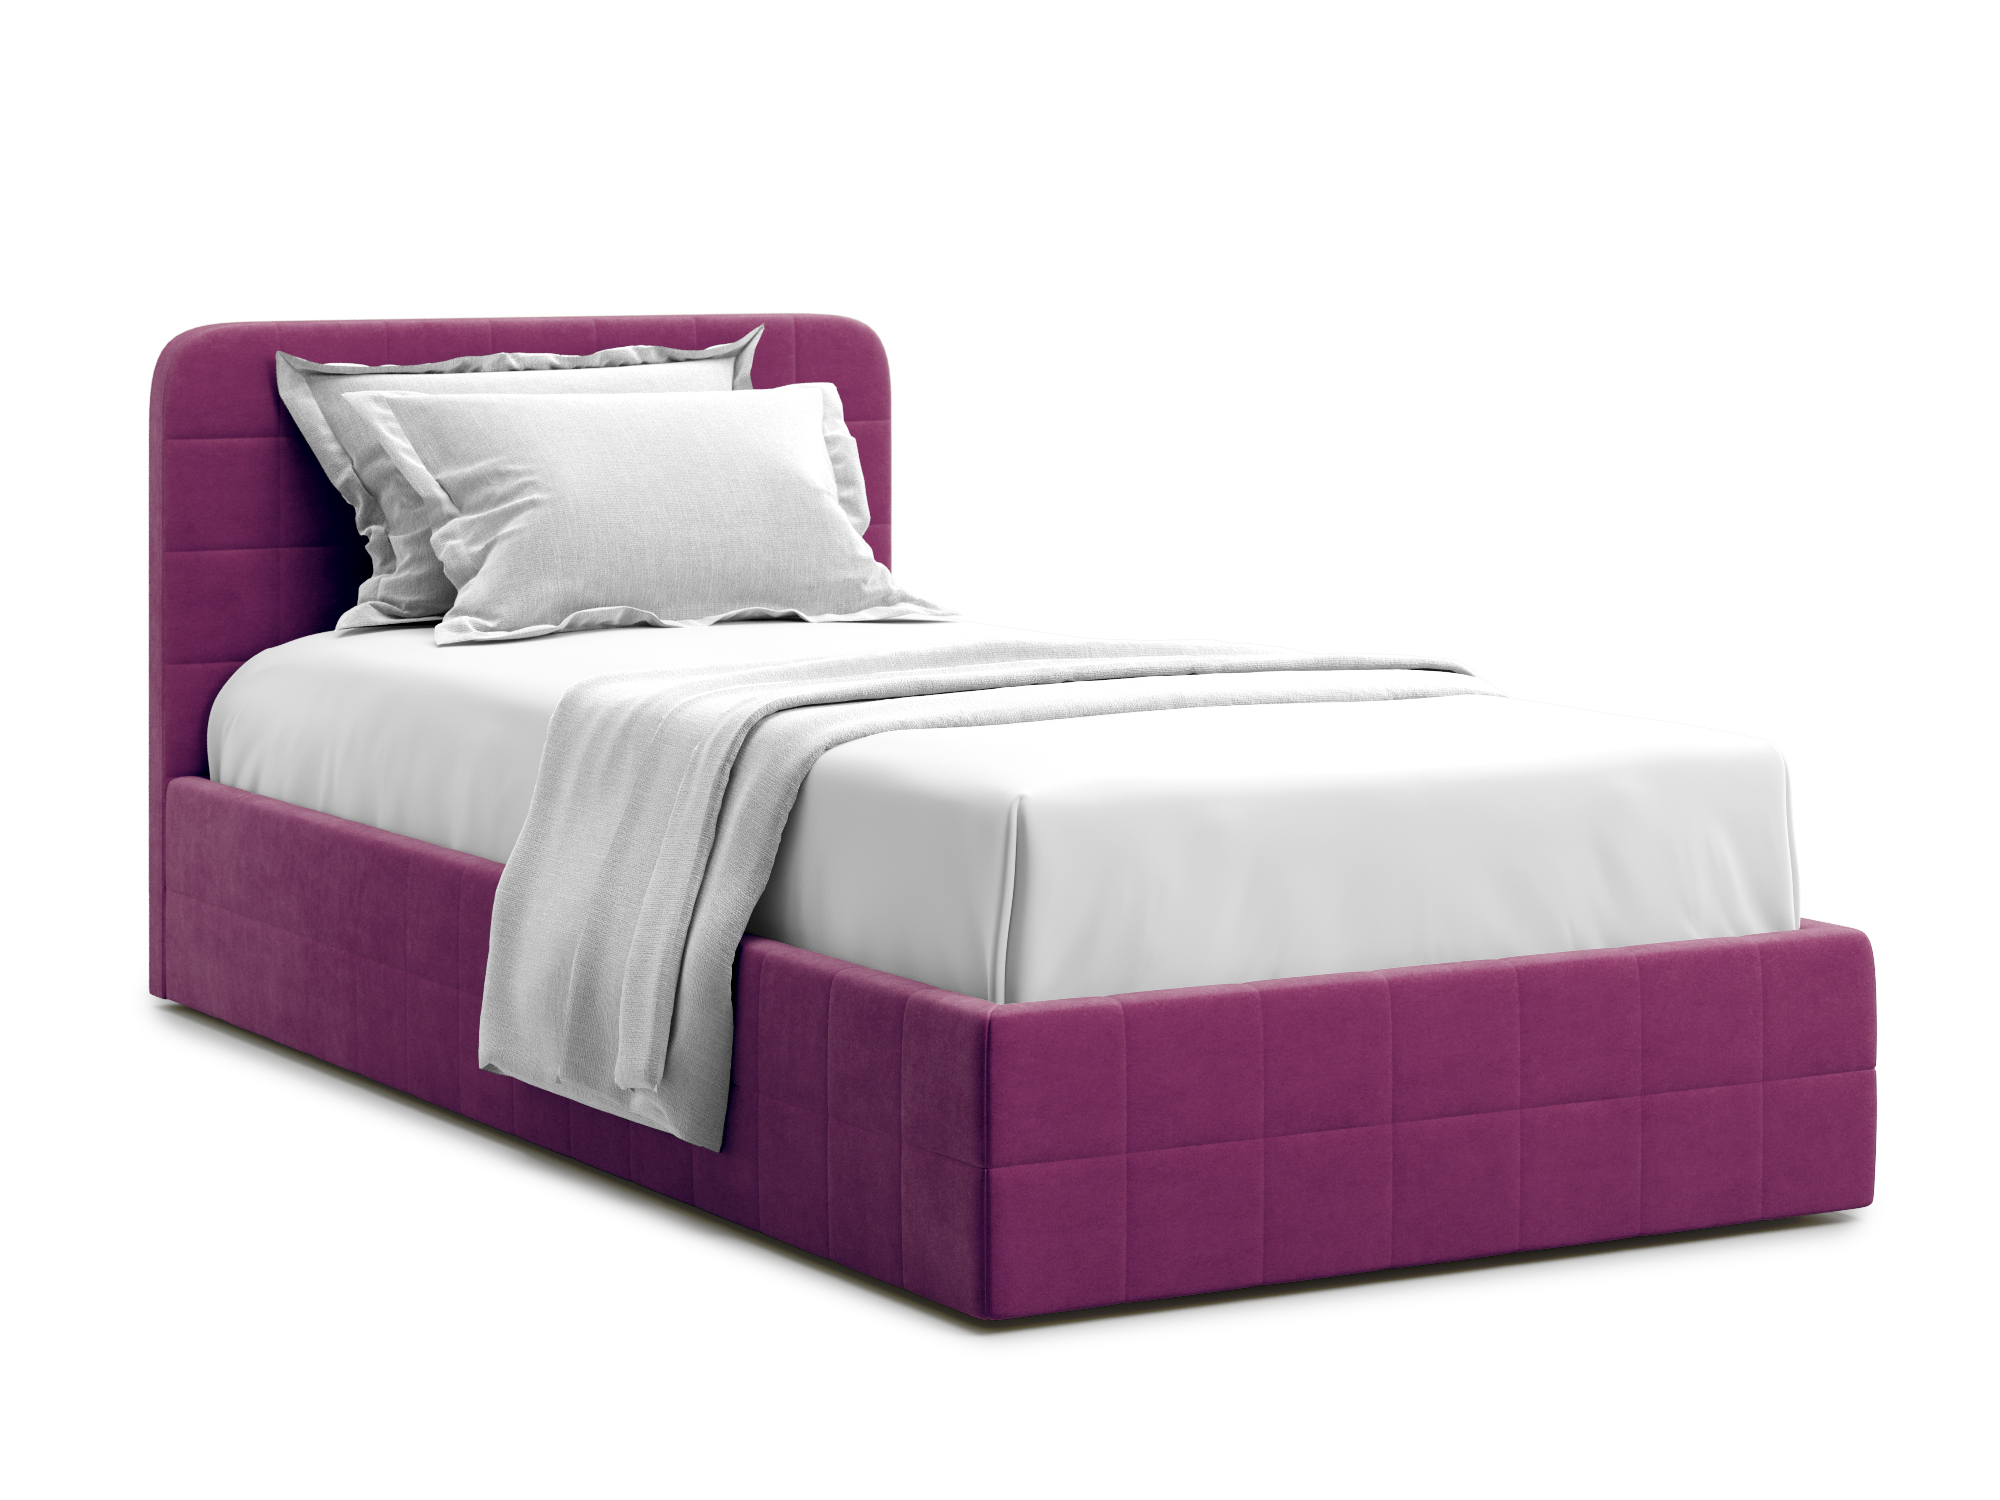 Кровать Adda 90 Velutto 15 Фиолетовый, Массив, ДСП кровать adda 90 velutto 14 ментоловый массив дсп